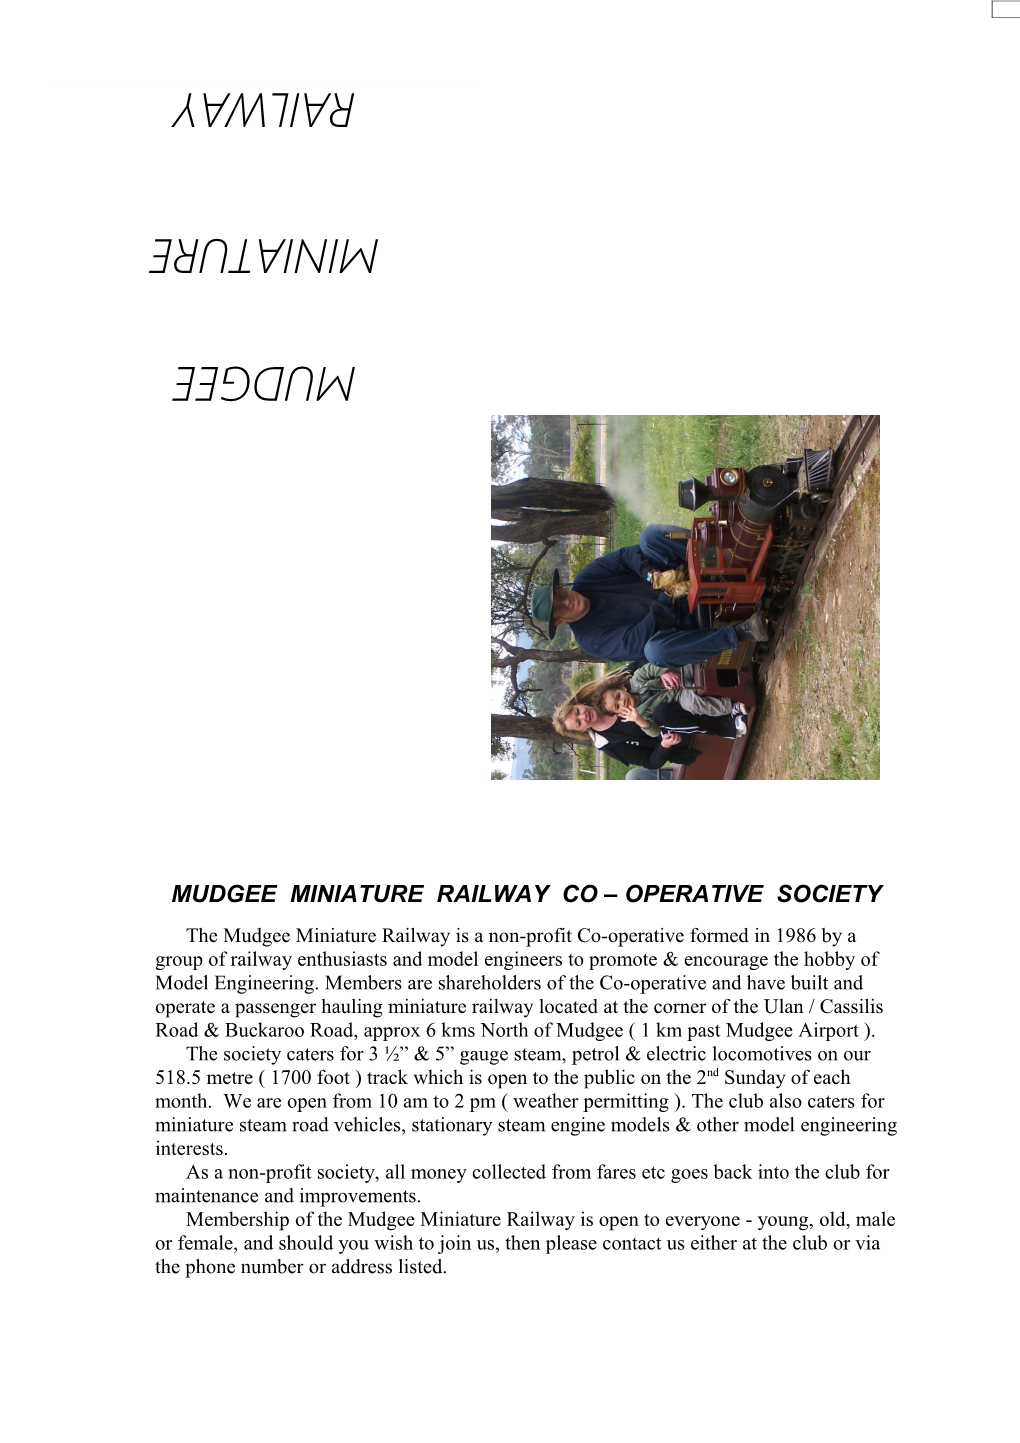 Mudgee Miniature Railway Co Operative Society